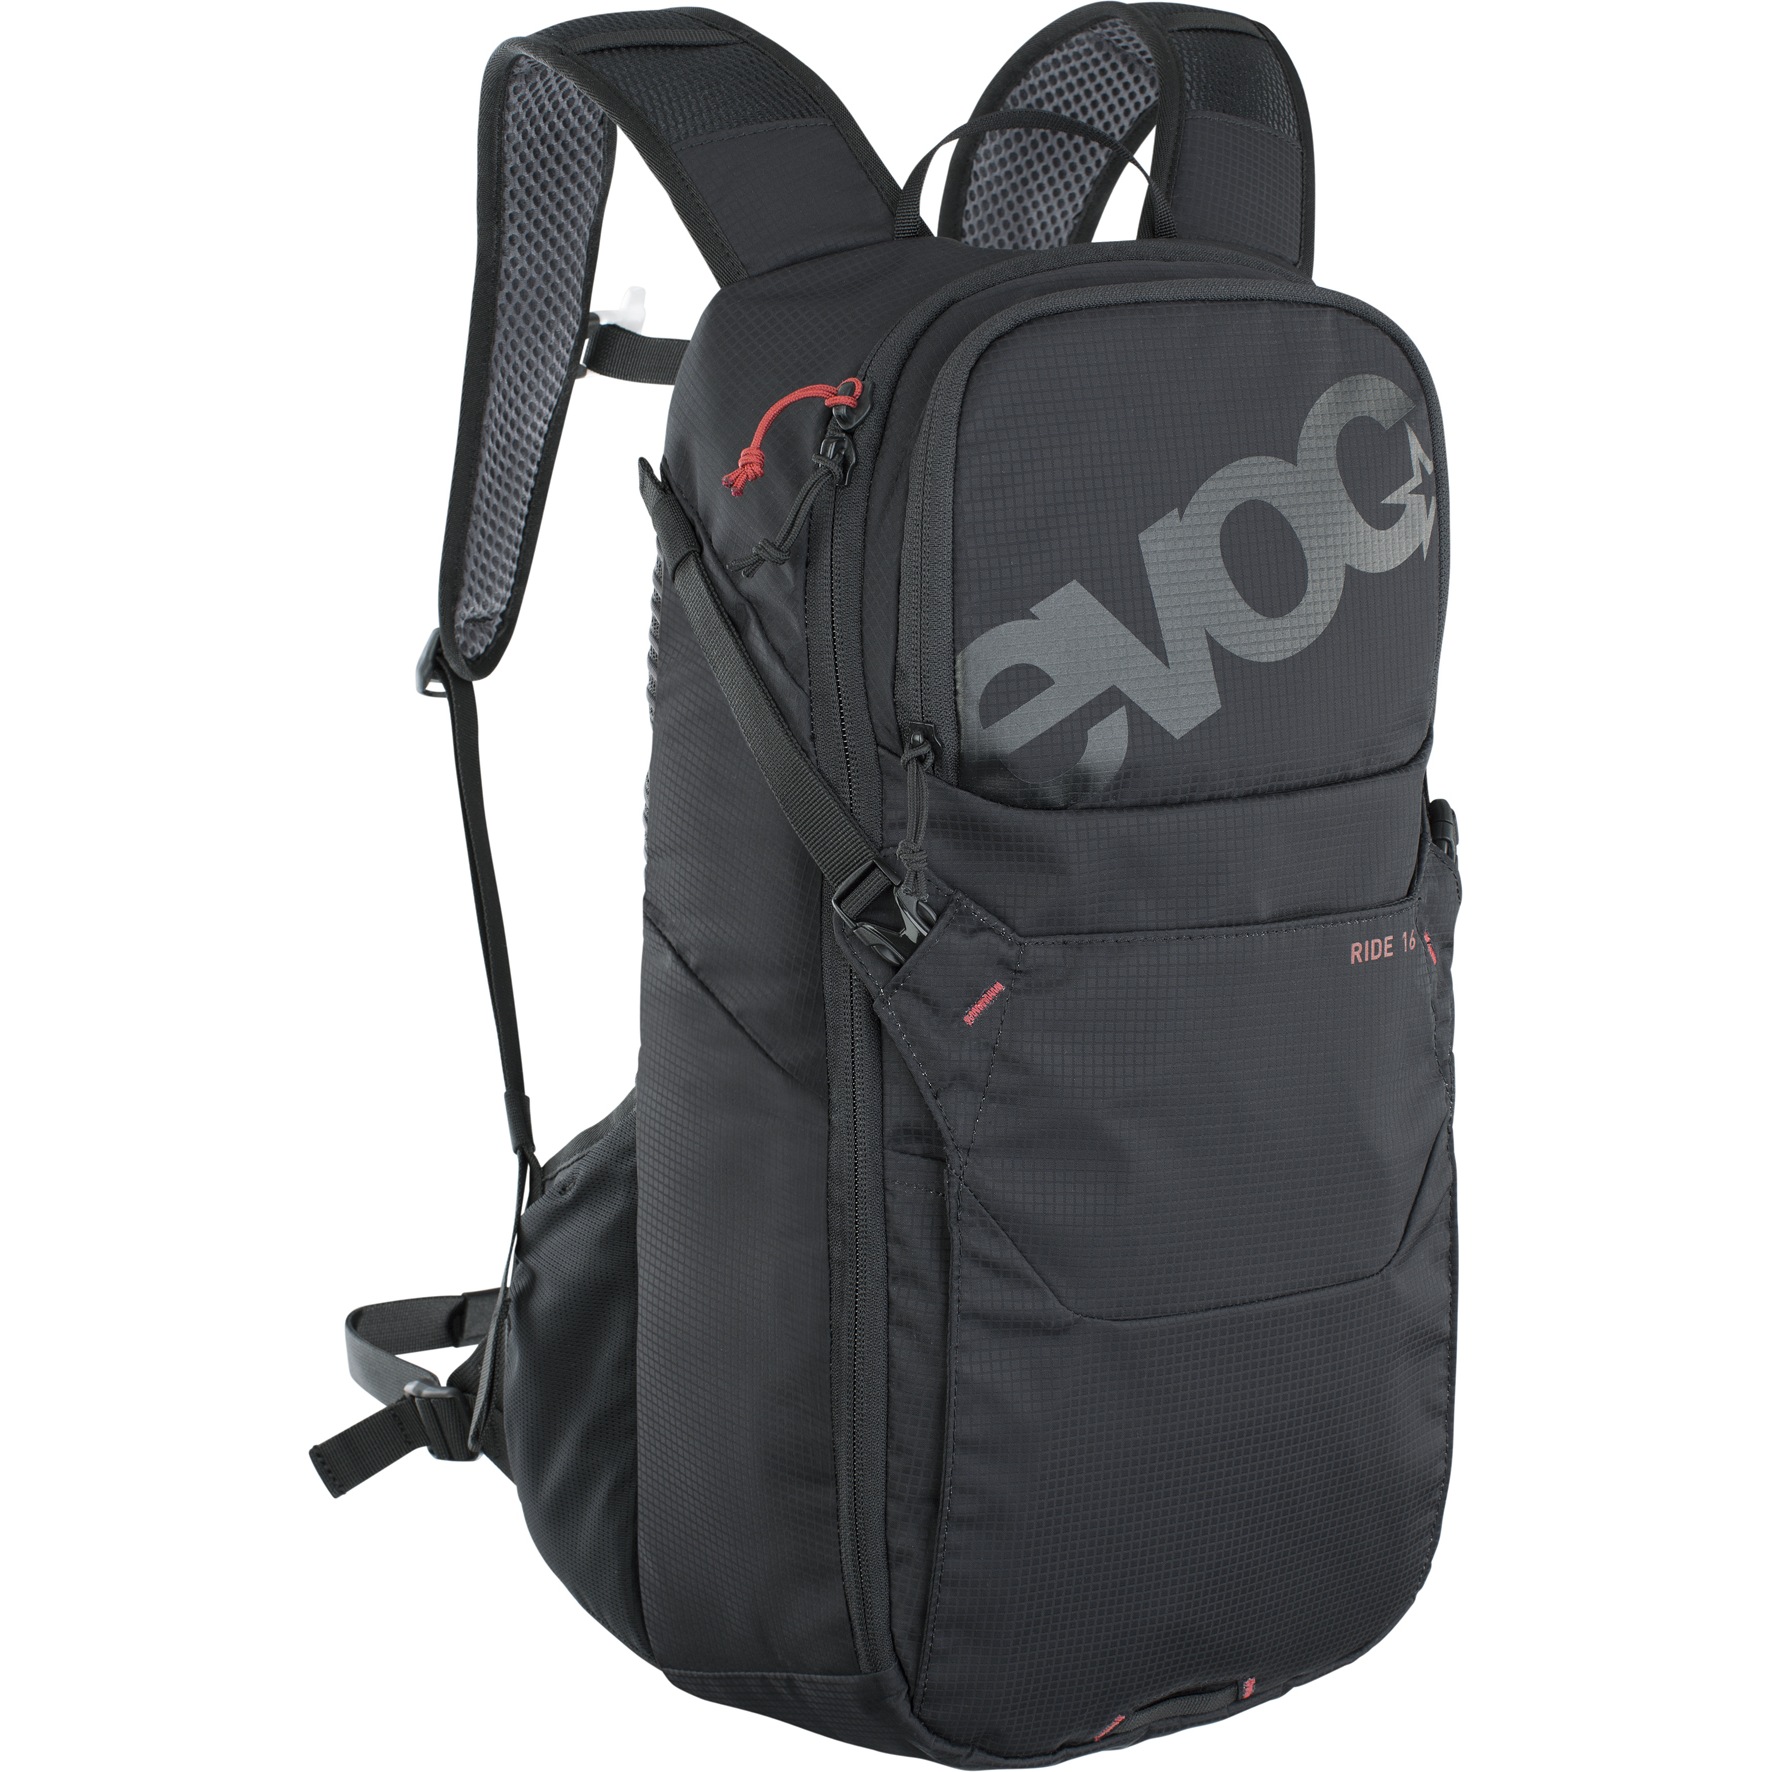 Productfoto van EVOC Ride 16L Backpack - Black